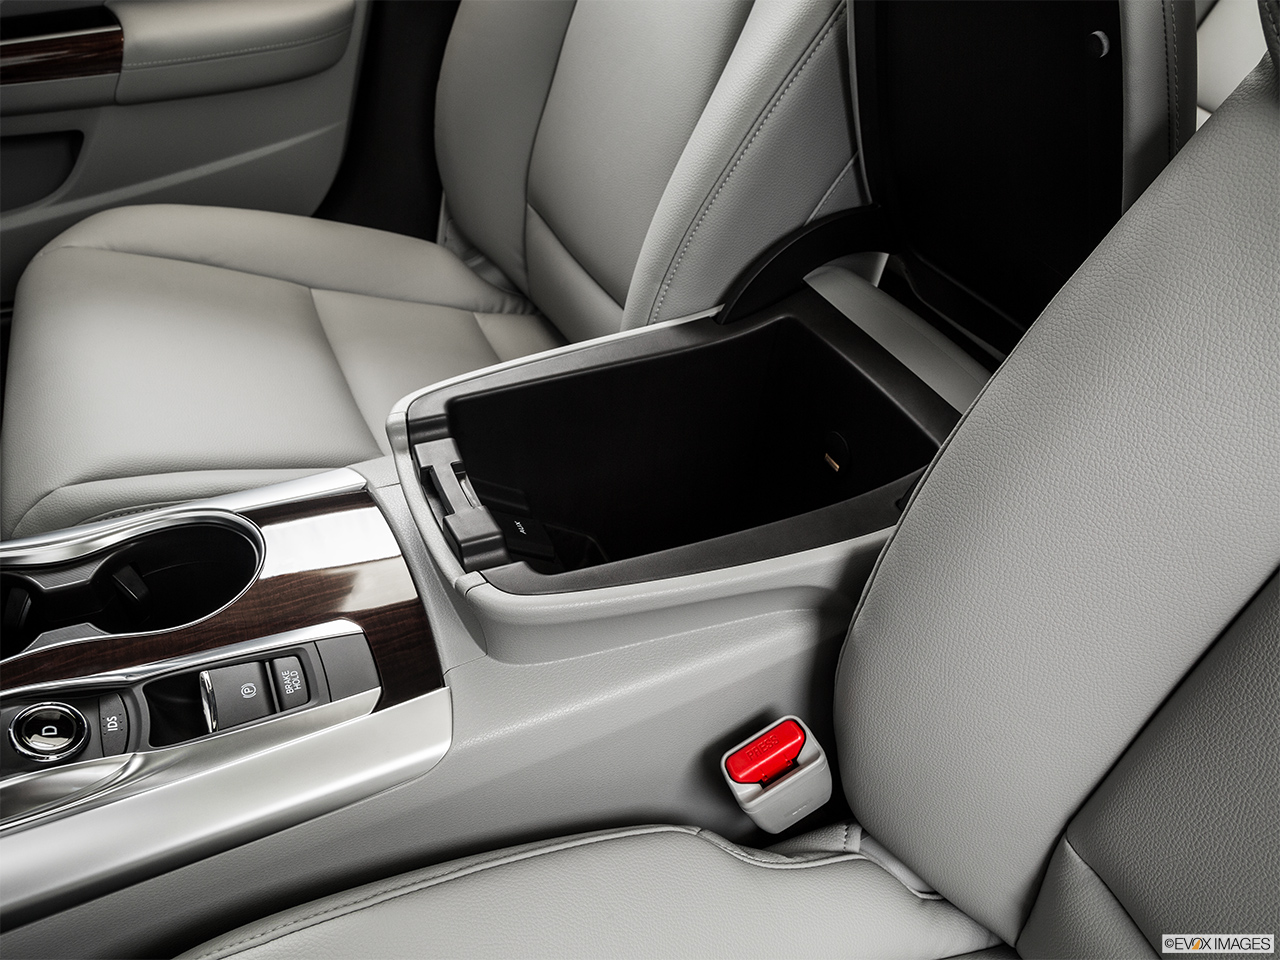 2015 Acura TLX 3.5 V-6 9-AT P-AWS Front center divider. 